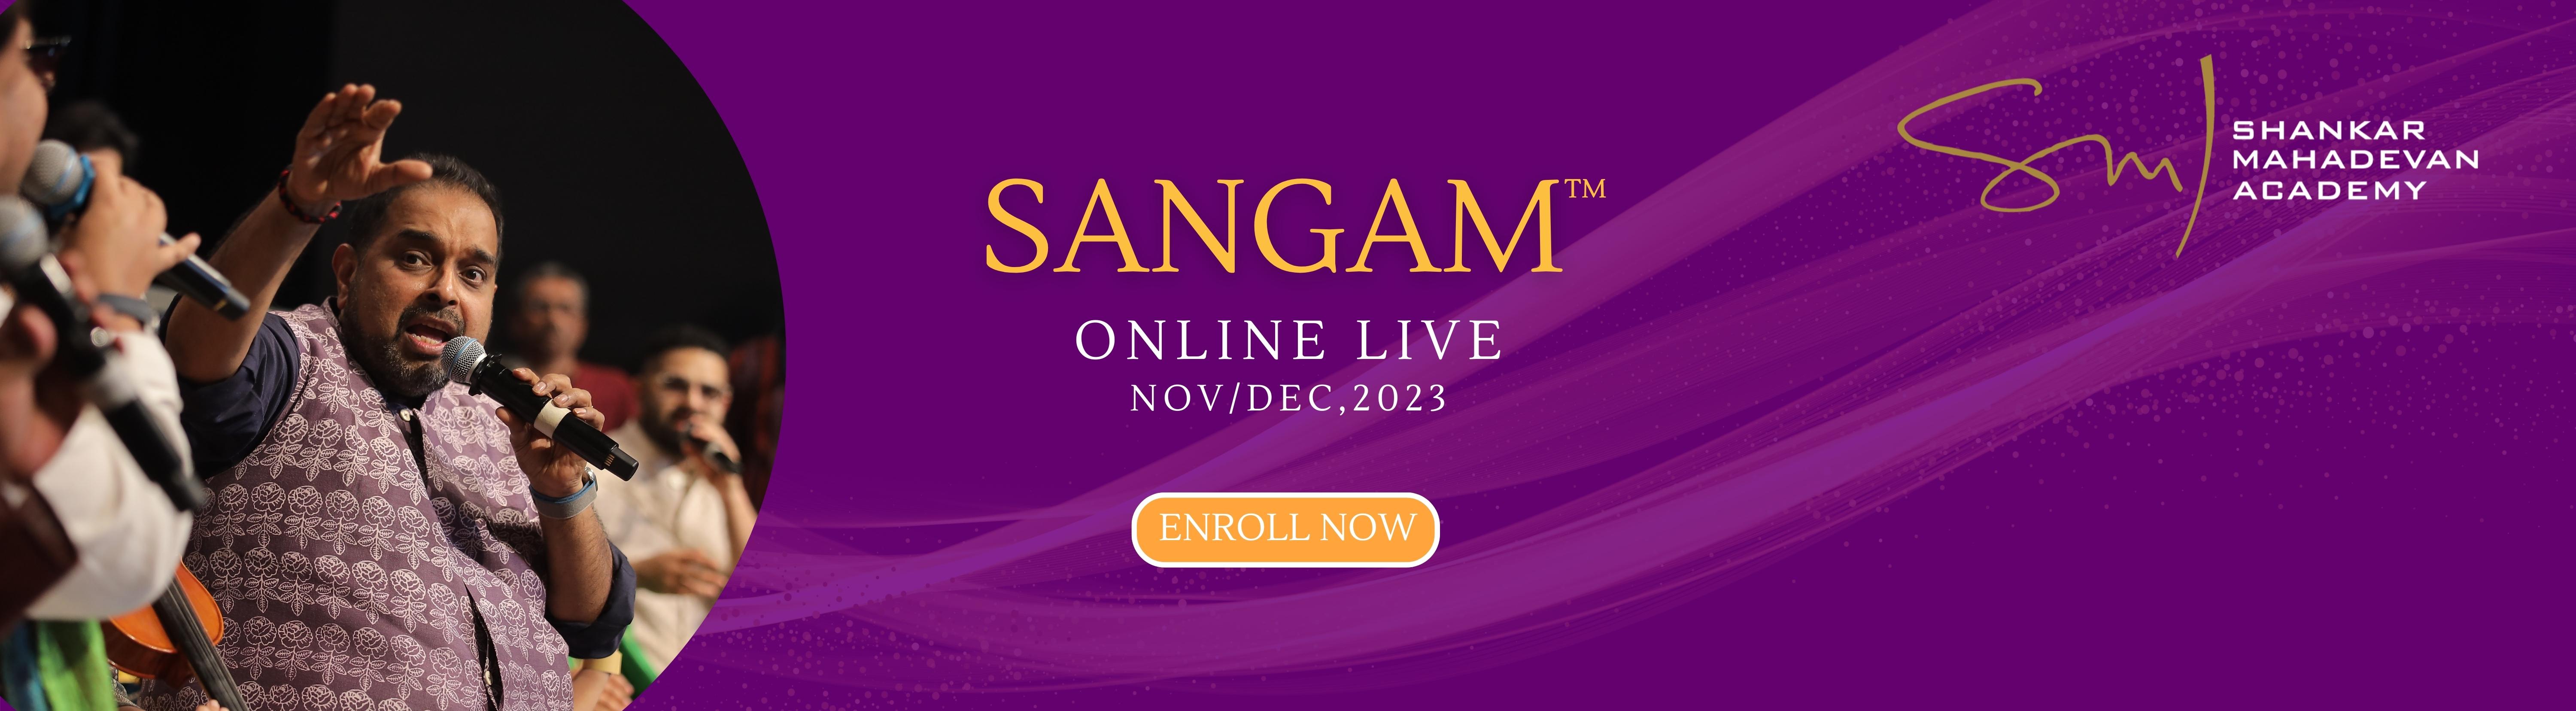 sangam-online-live-2023-tm